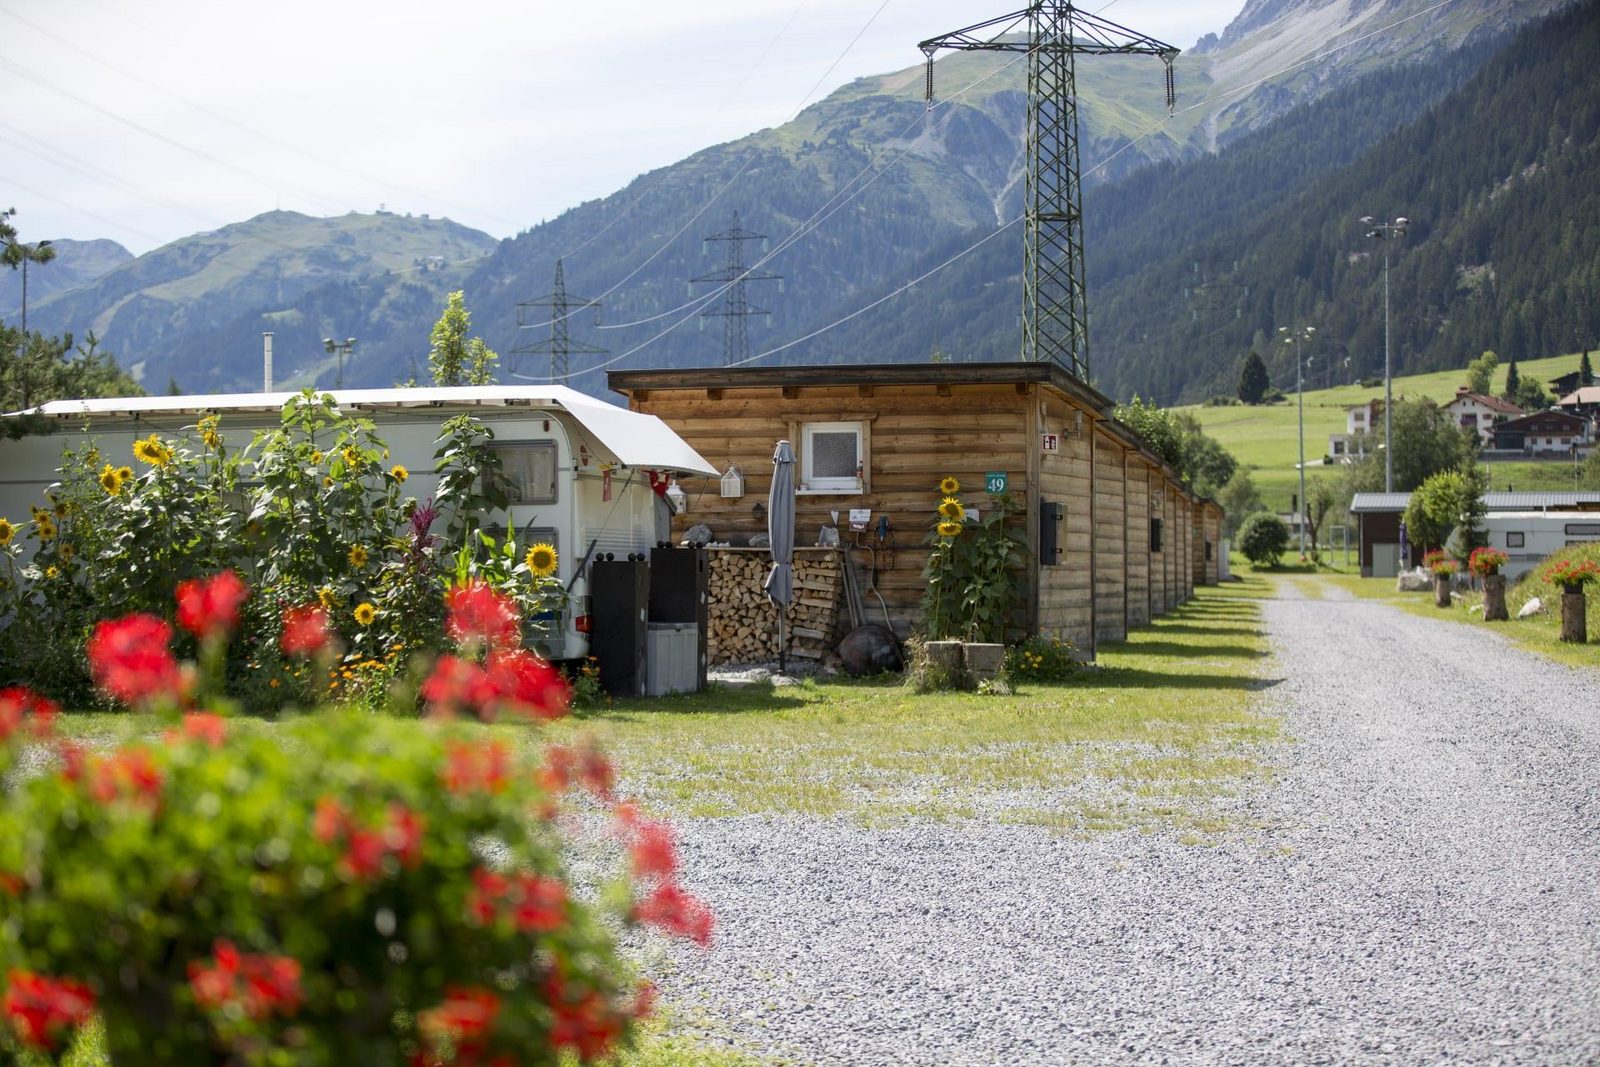 Camping pitch Arlberg (incl. private sanitary facilities)